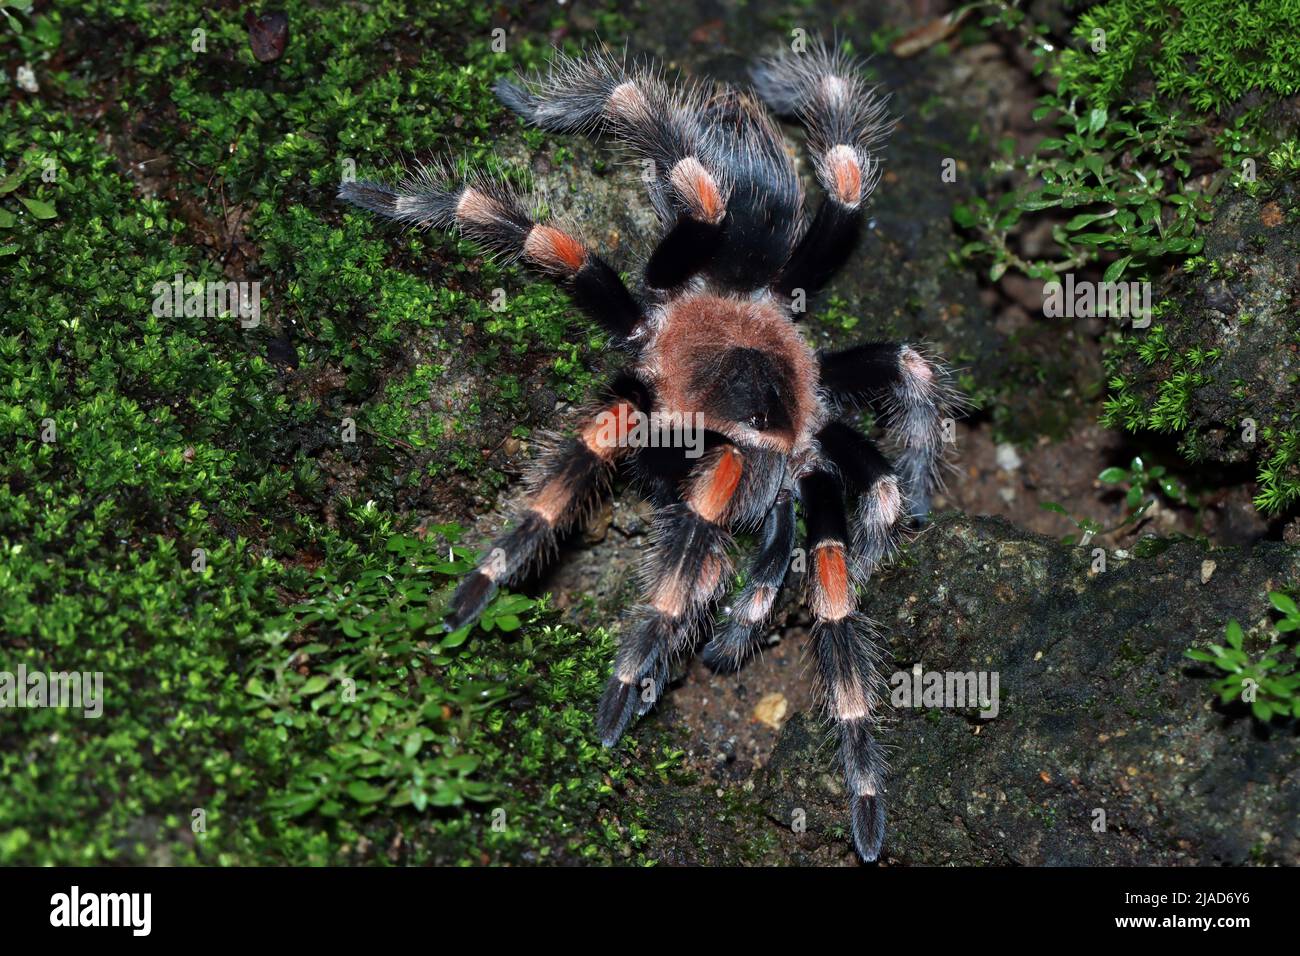 Overhead view of Hamorii tarantula (Brachypelma hamorii) on mossy ground, Indonesia Stock Photo